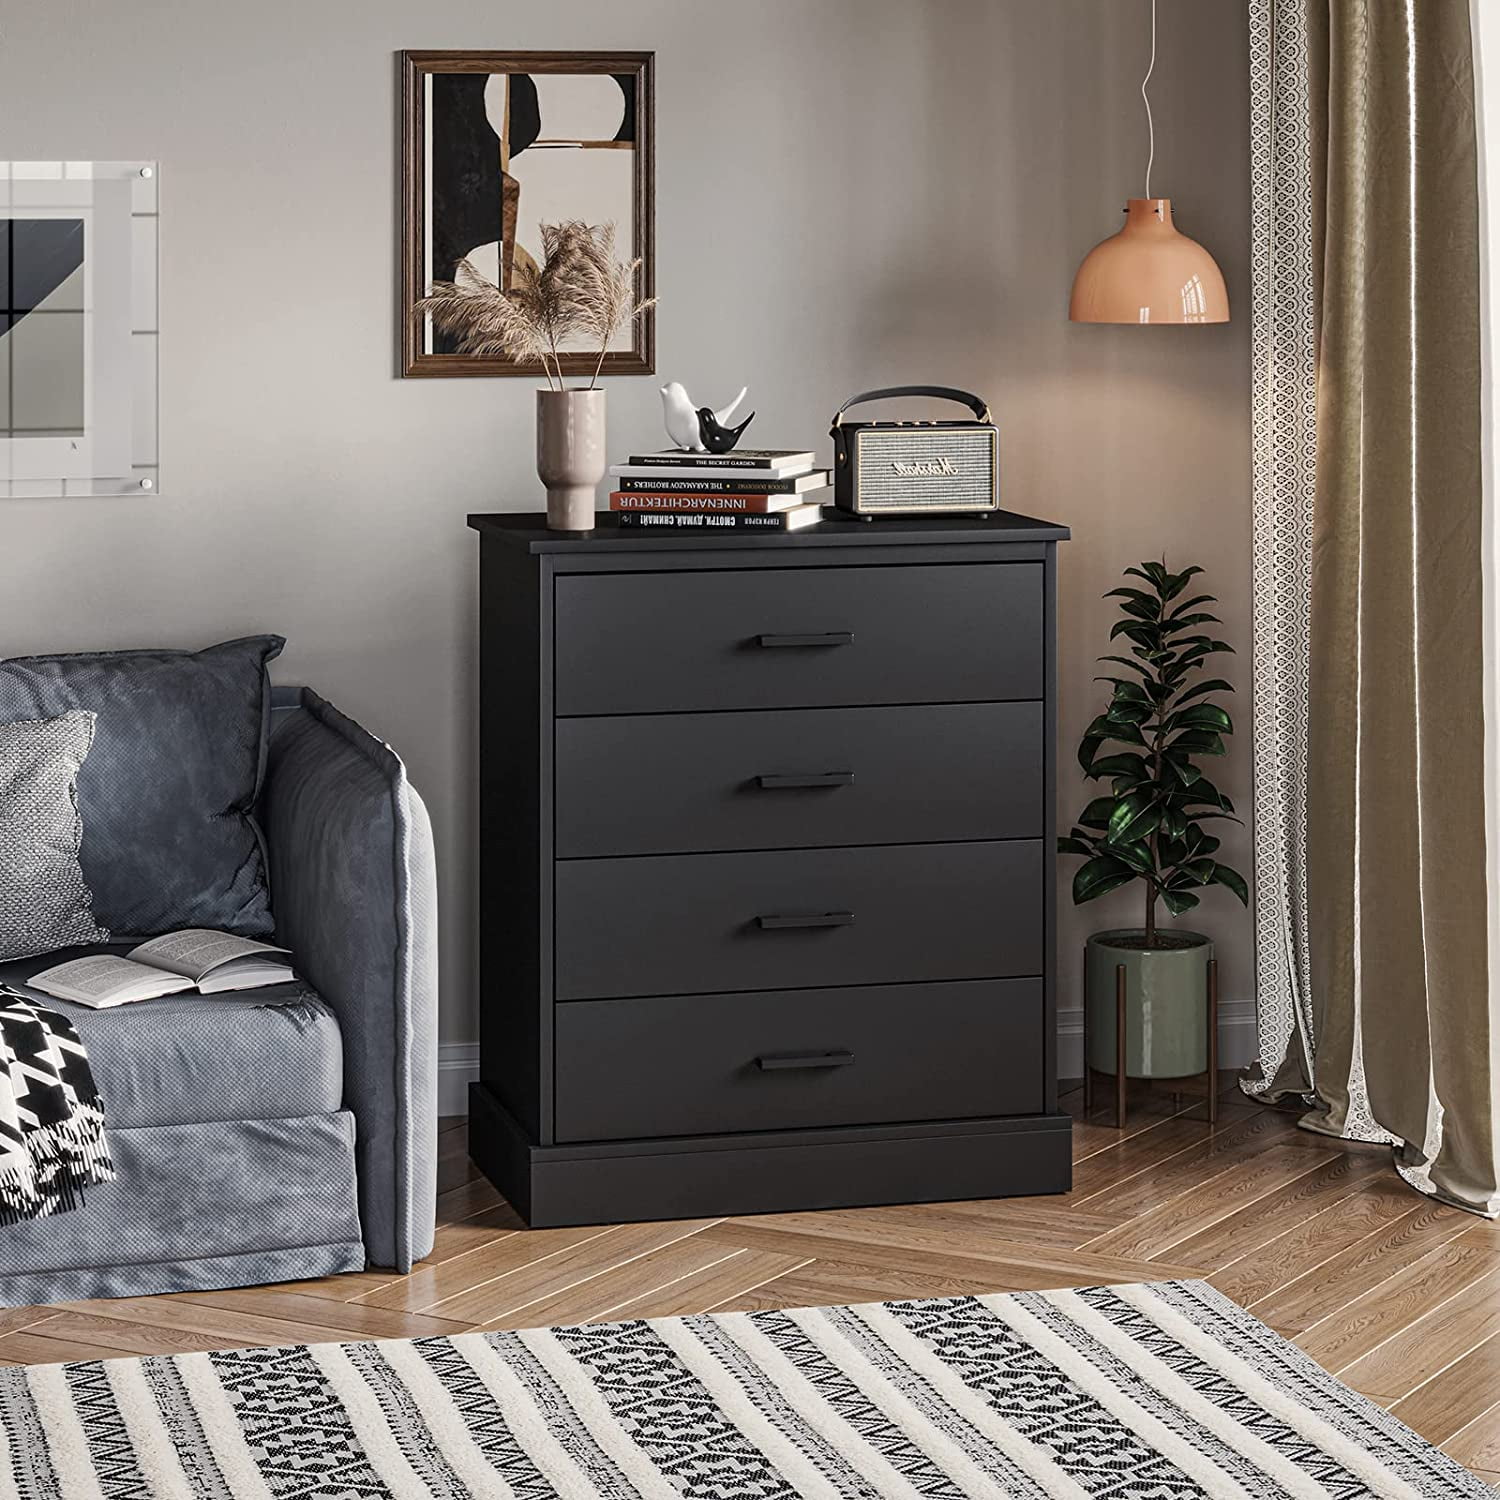 New 4 Drawer Chest Dresser Clothes Storage Bedroom Furniture wood Cabinet Black 